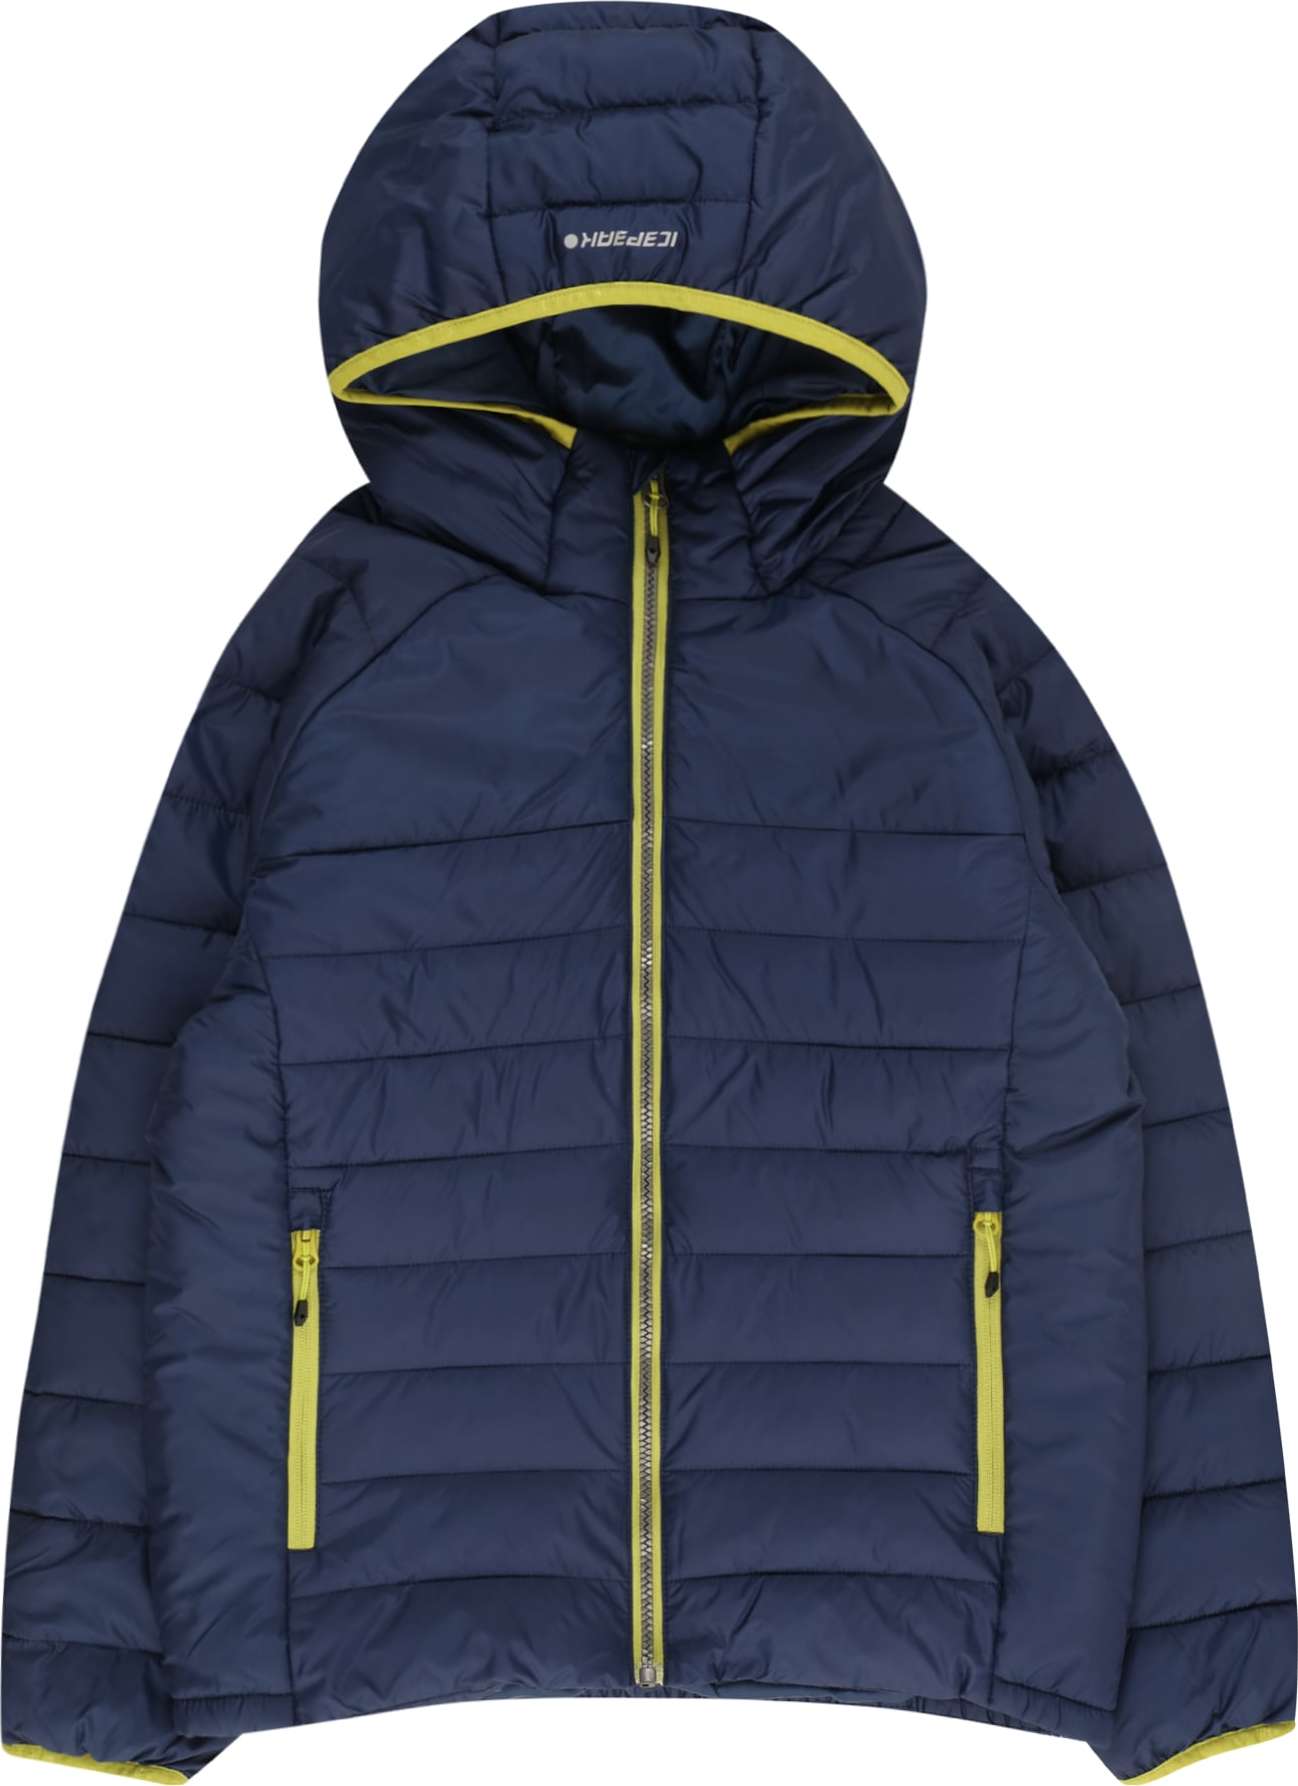 ICEPEAK Outdoorová bunda 'KAMIAH' enciánová modrá / žlutá / světle šedá